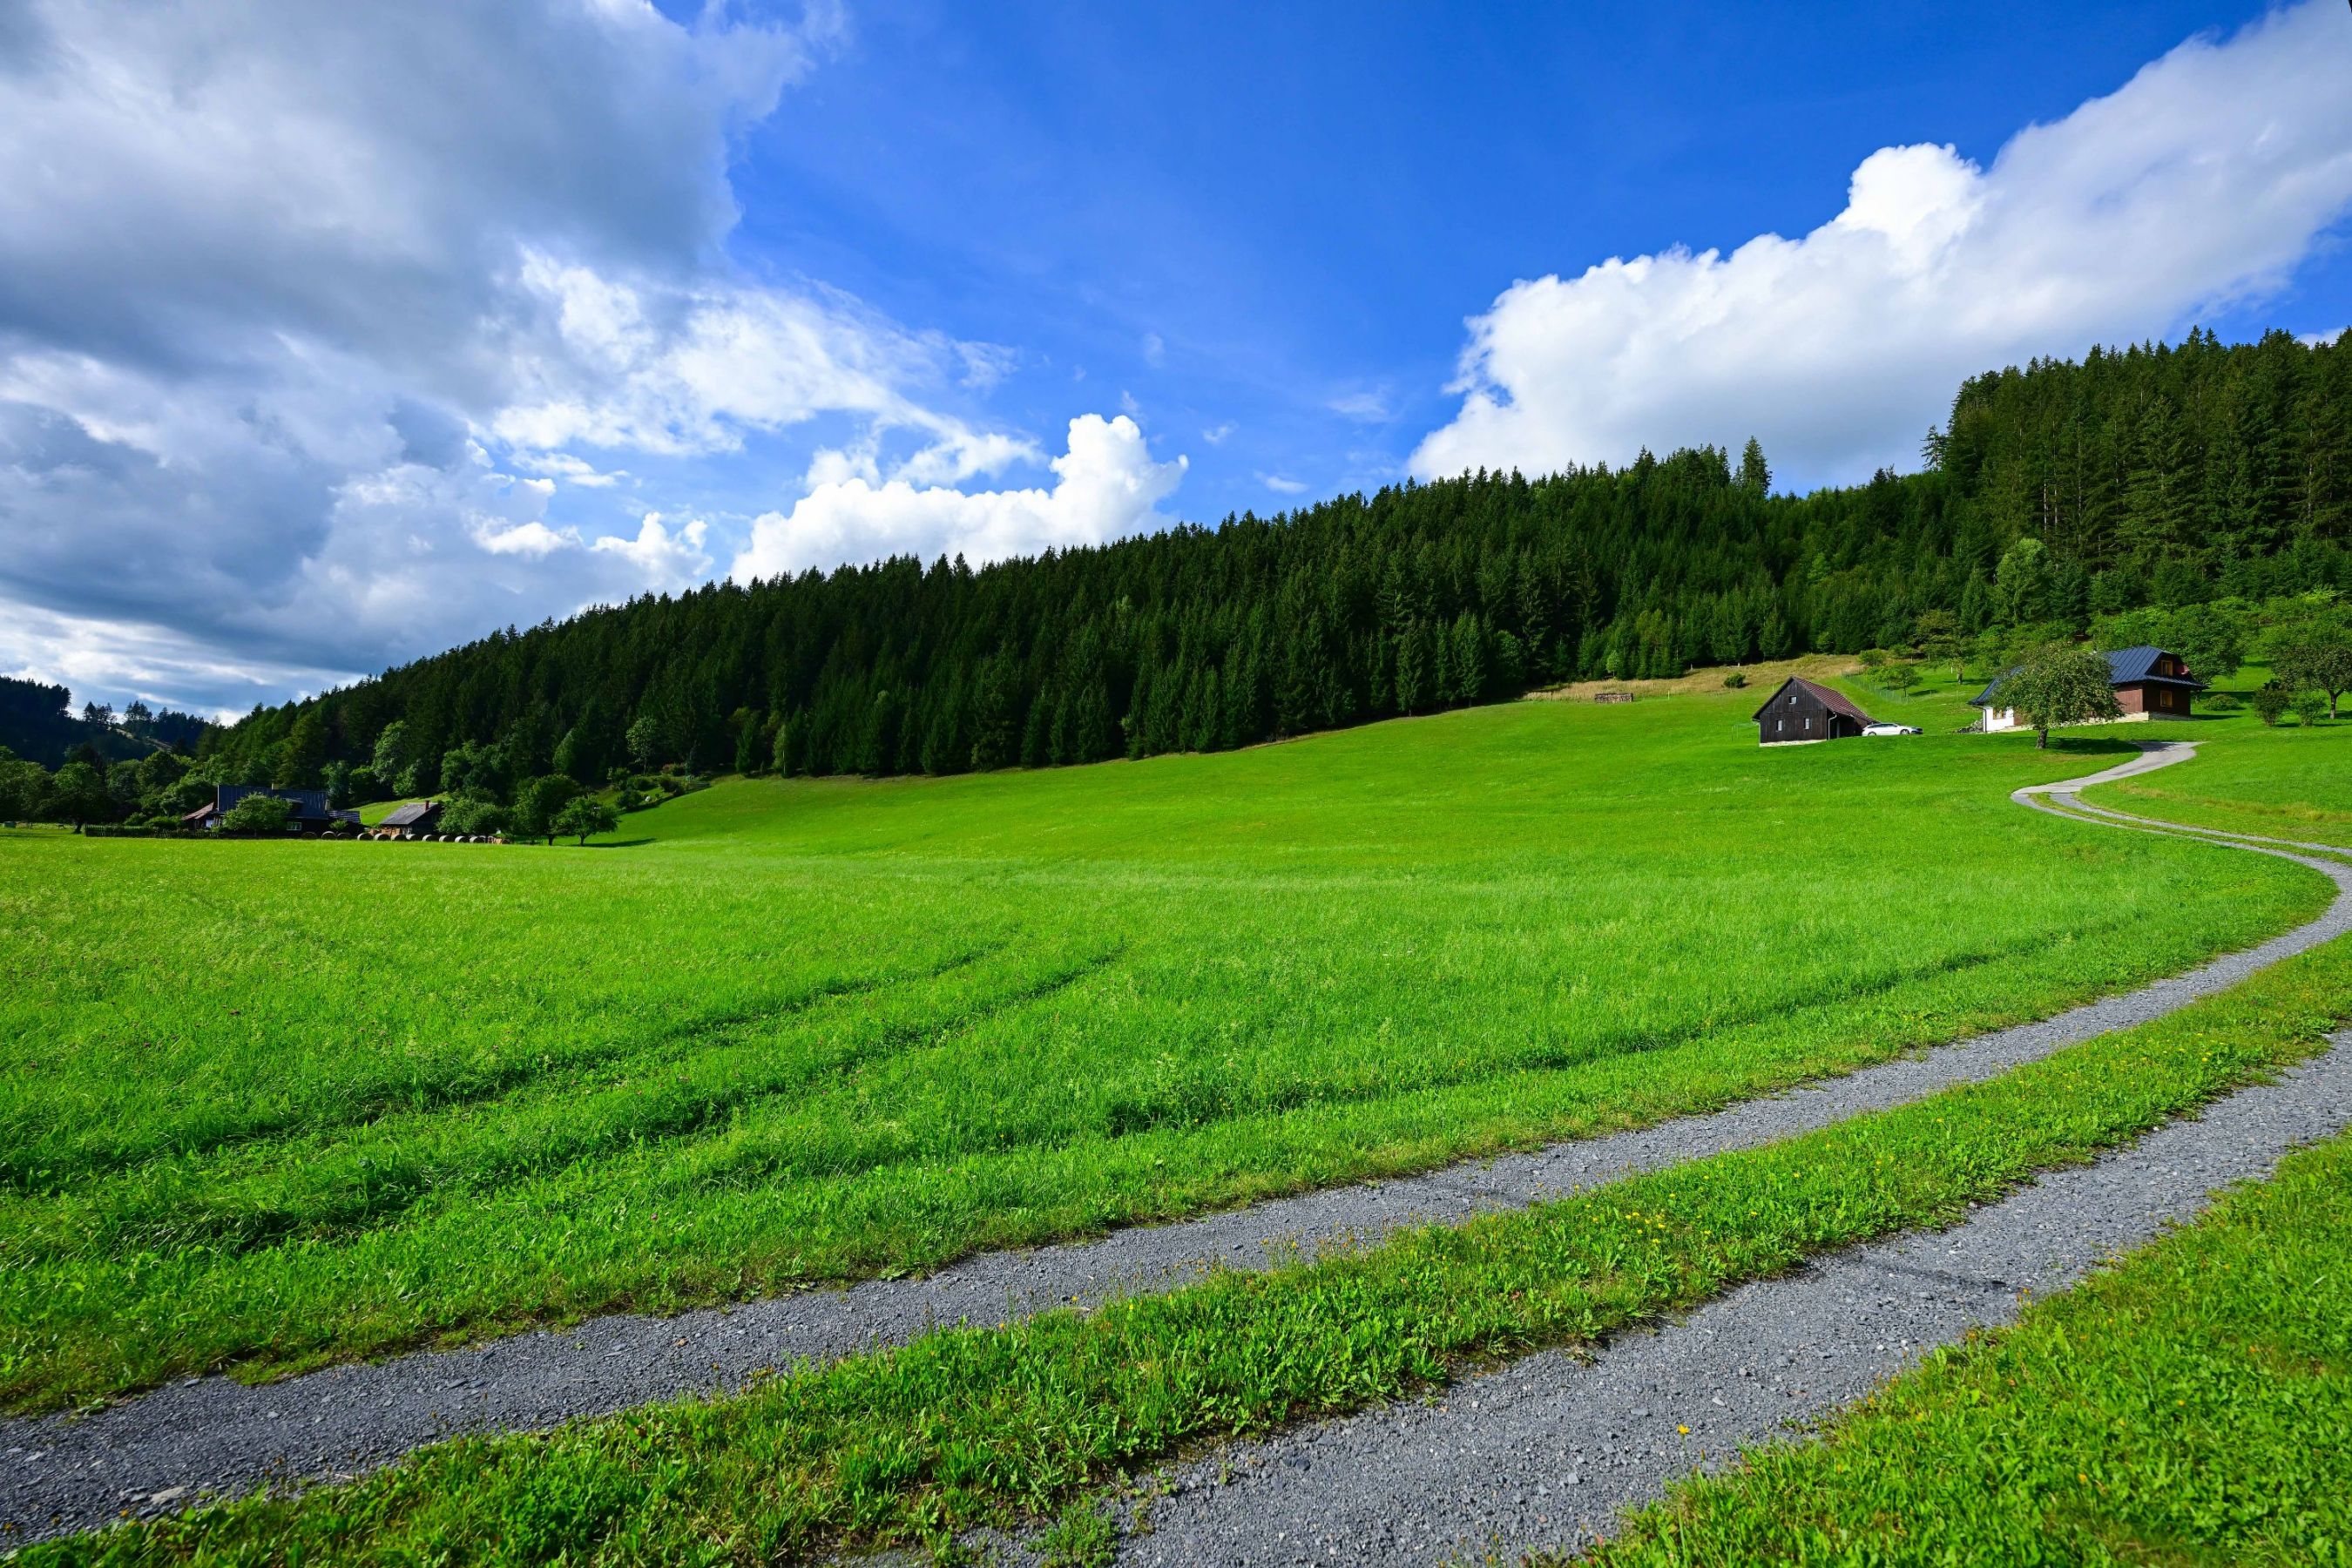 Krajina a domčeky v českom pohorí Beskydy počas slnečného, letného dňa.